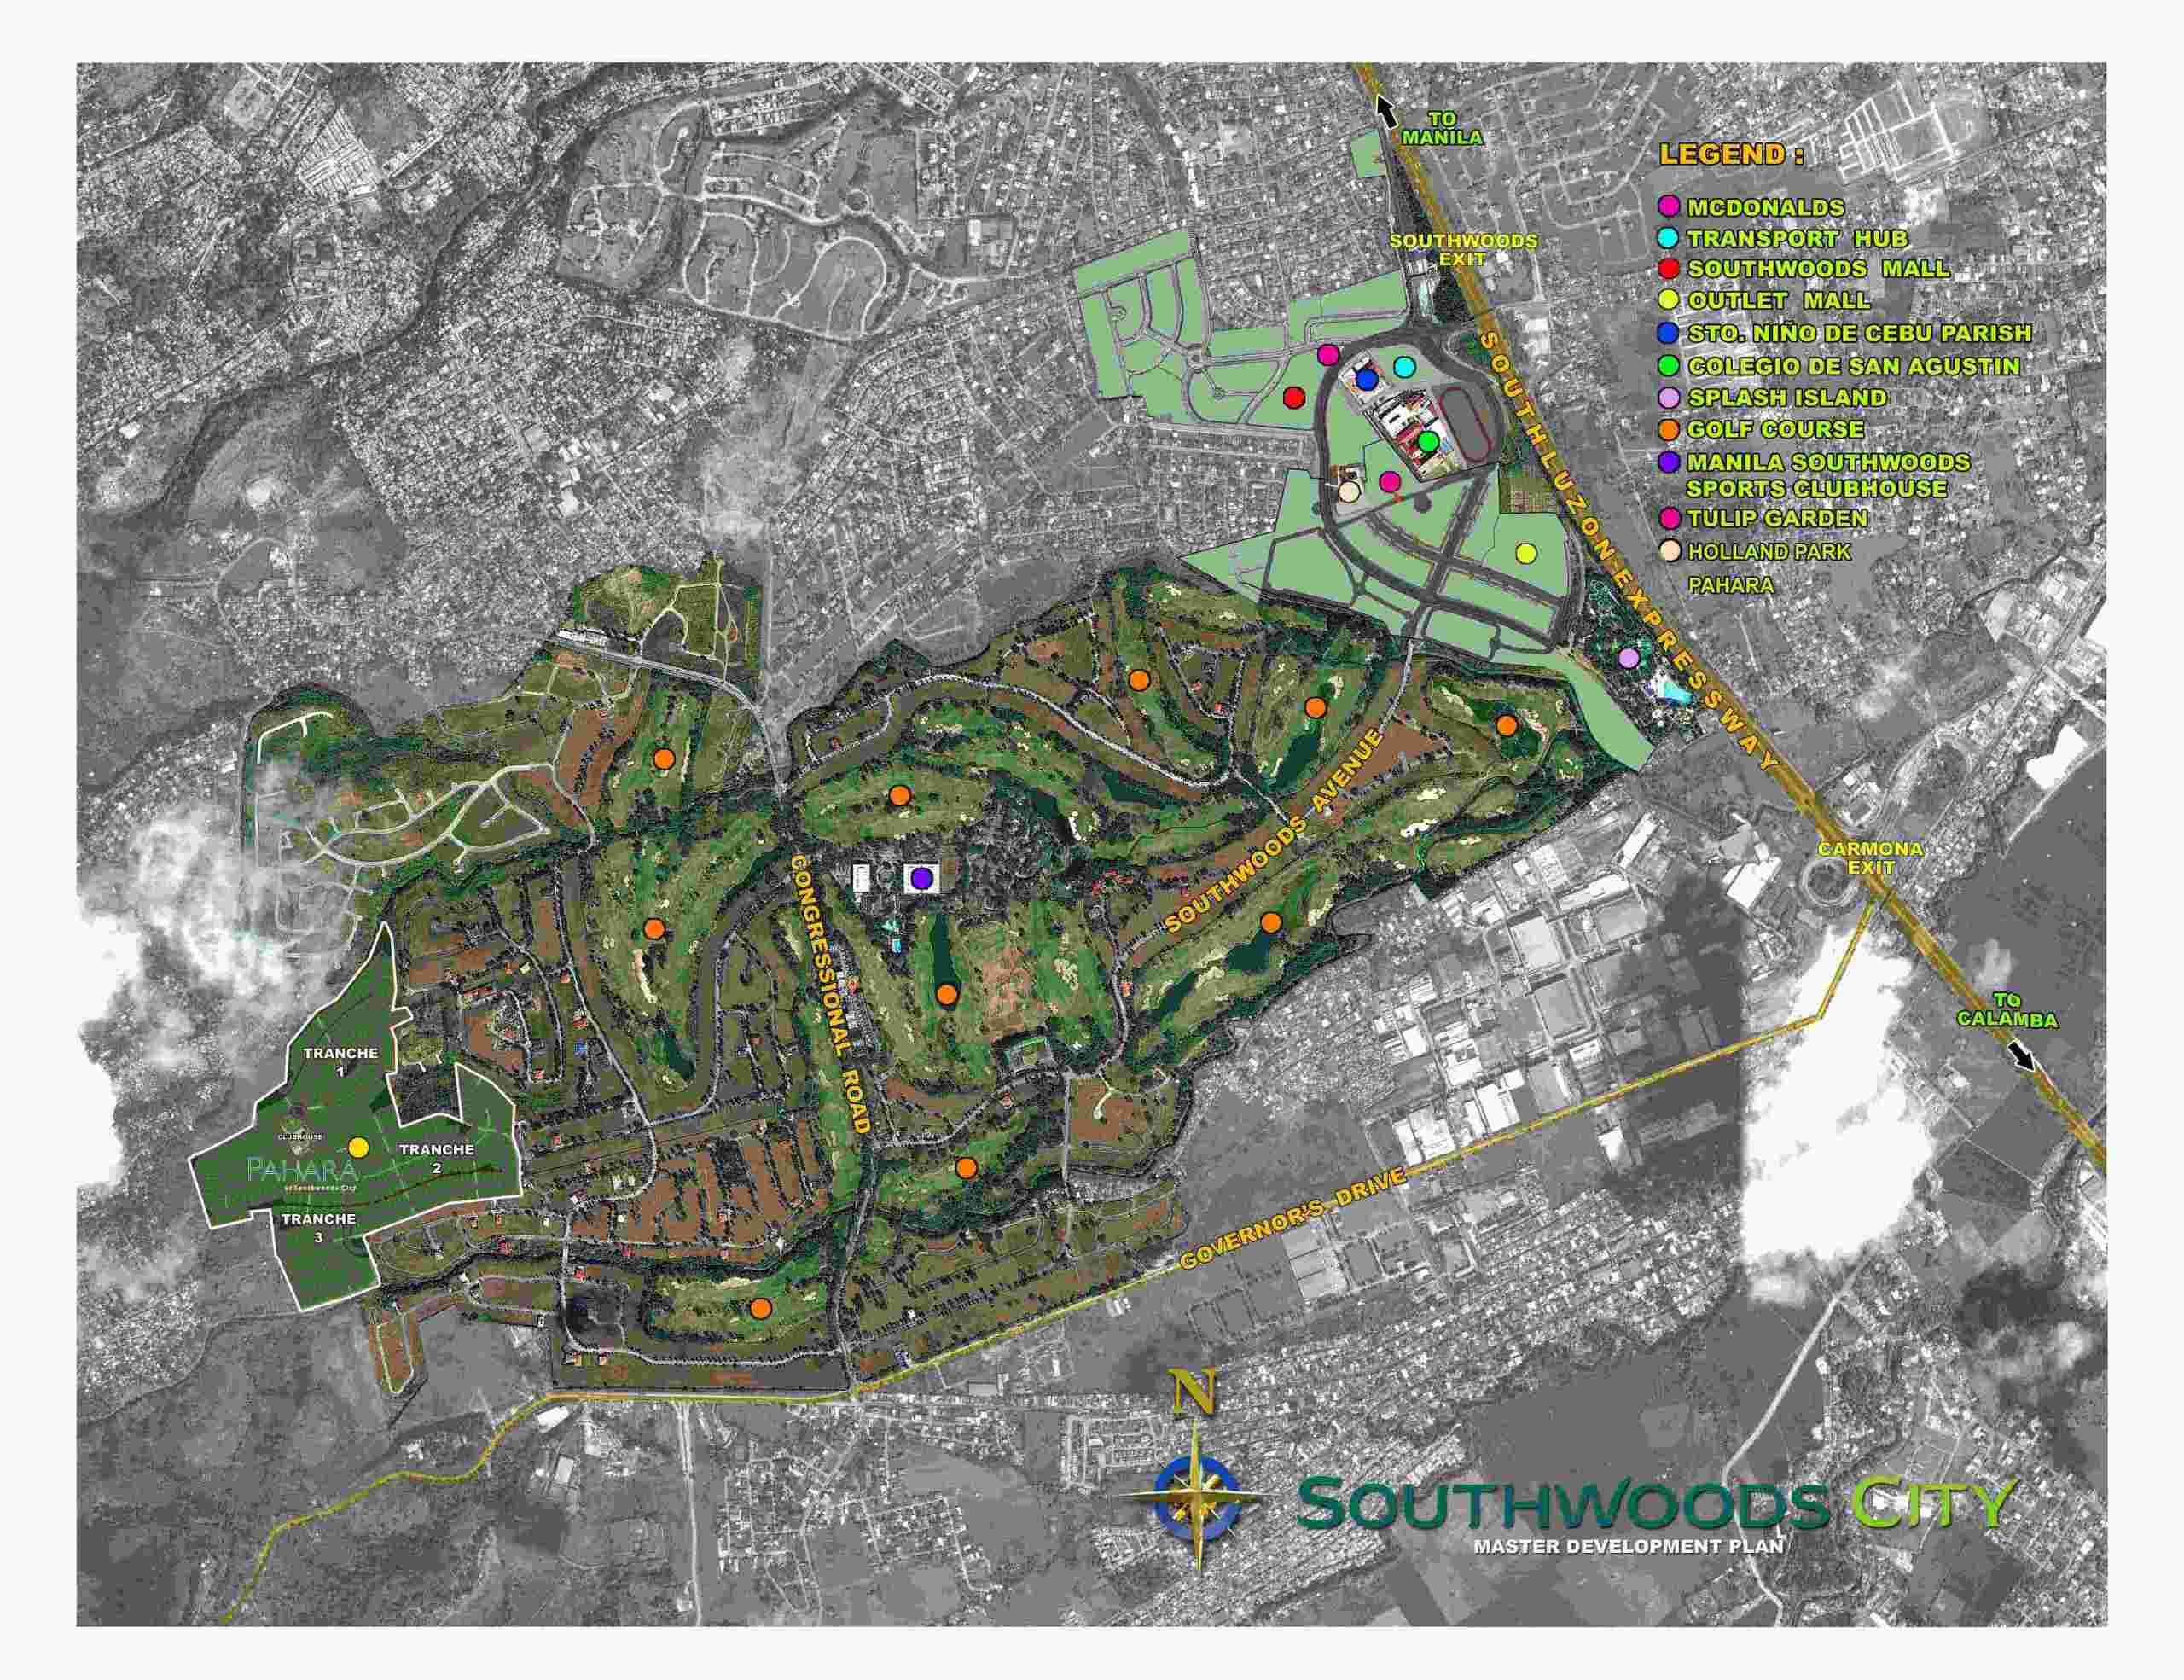 southwoods city master development plan